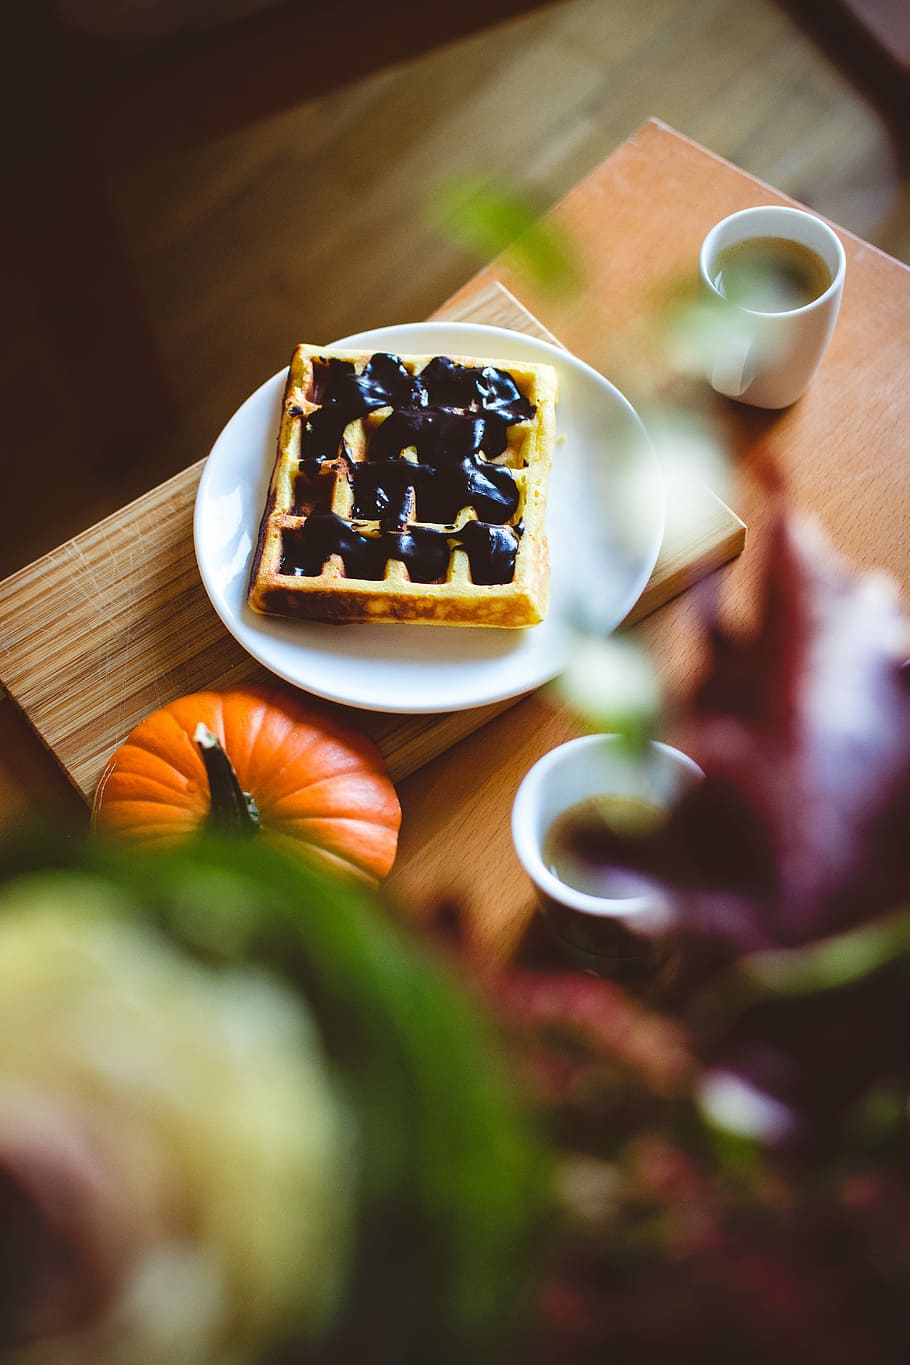 Autumn relax with waffle and coffee, chocolate, dark chocolate